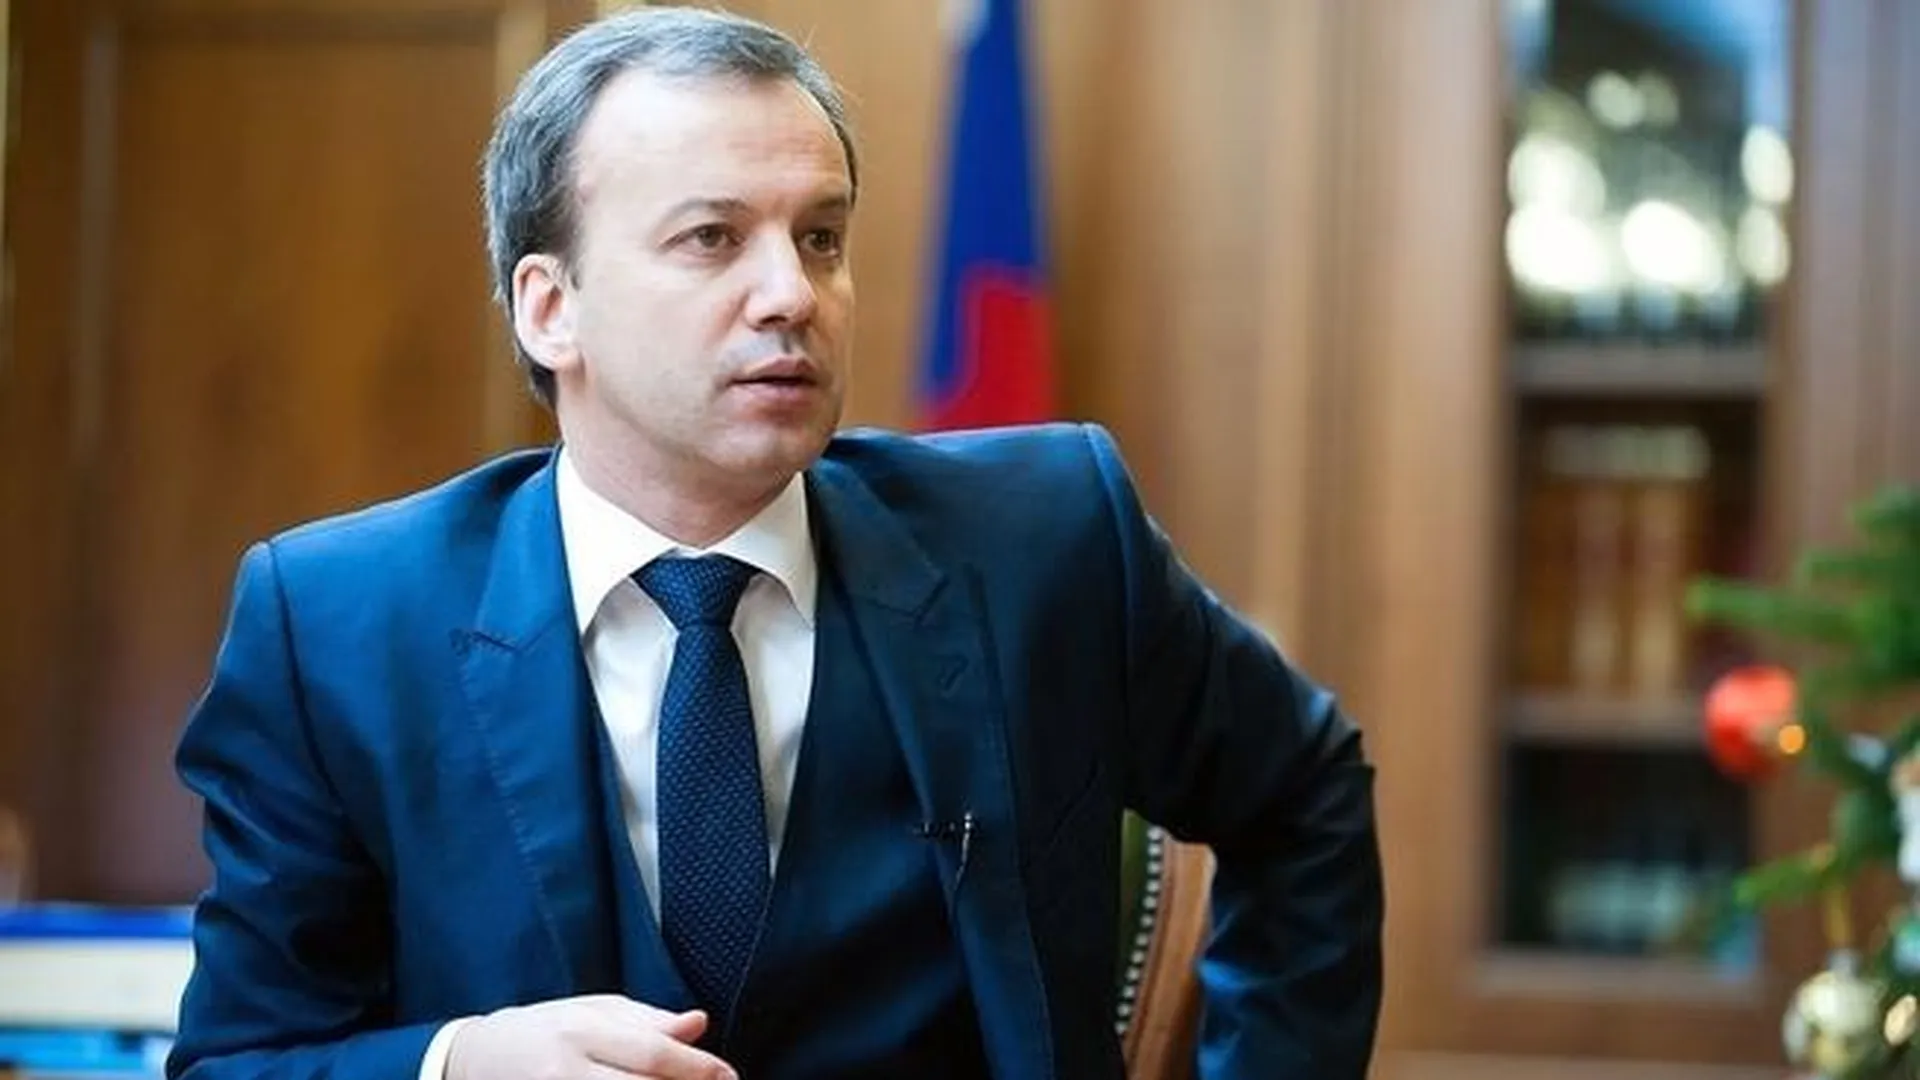 Дворкович уходит с поста председателя фонда «Сколково» после слов об операции на Украине